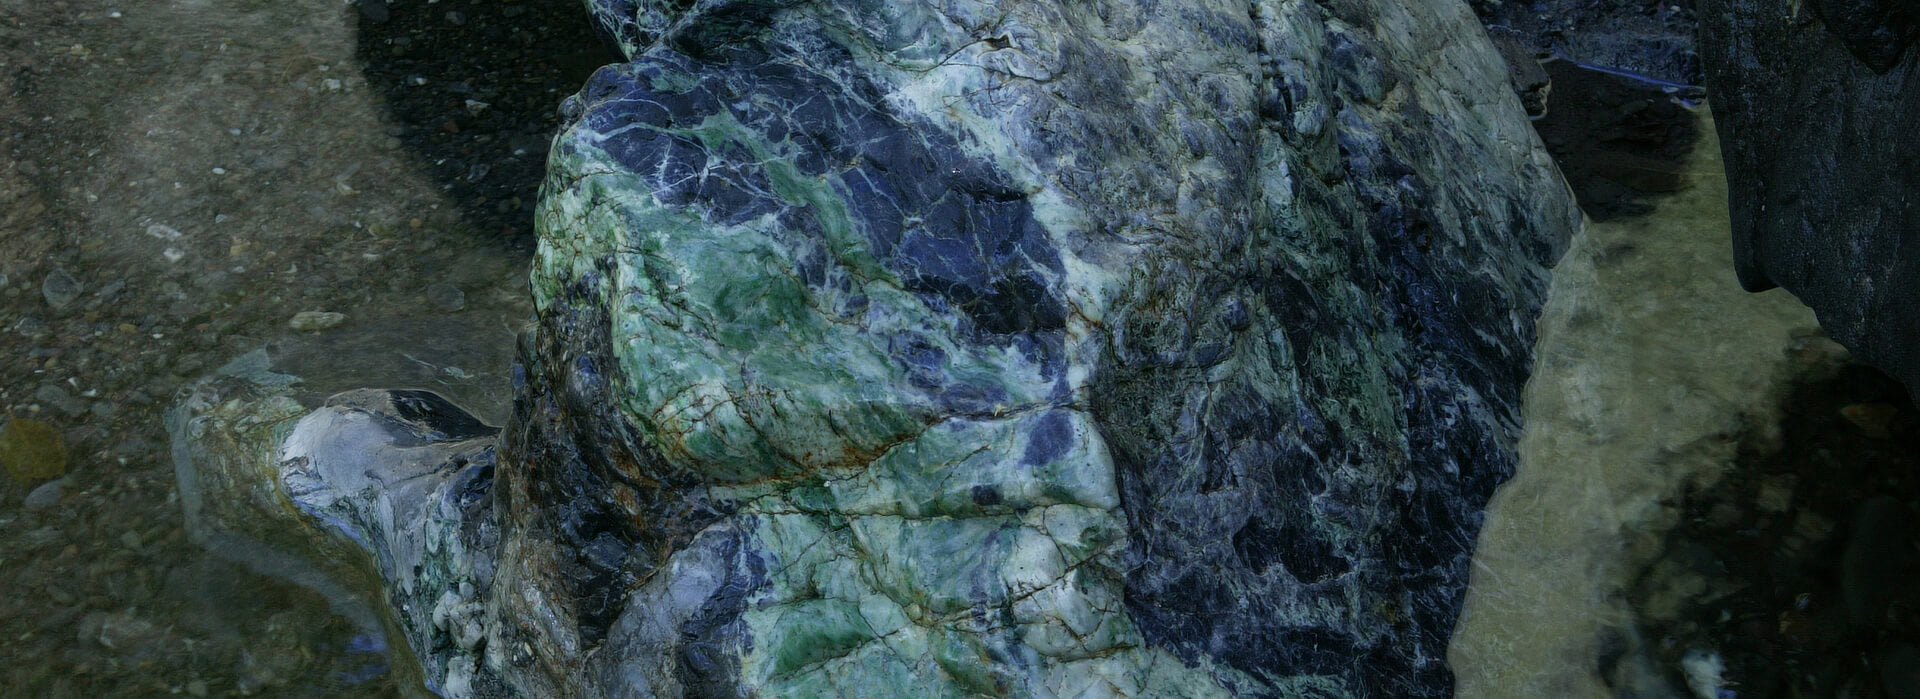 Extraordinary blue, green, white multicolored jade boulder in stream bed, Trinity Mountain wilderness, Cailifornia. 